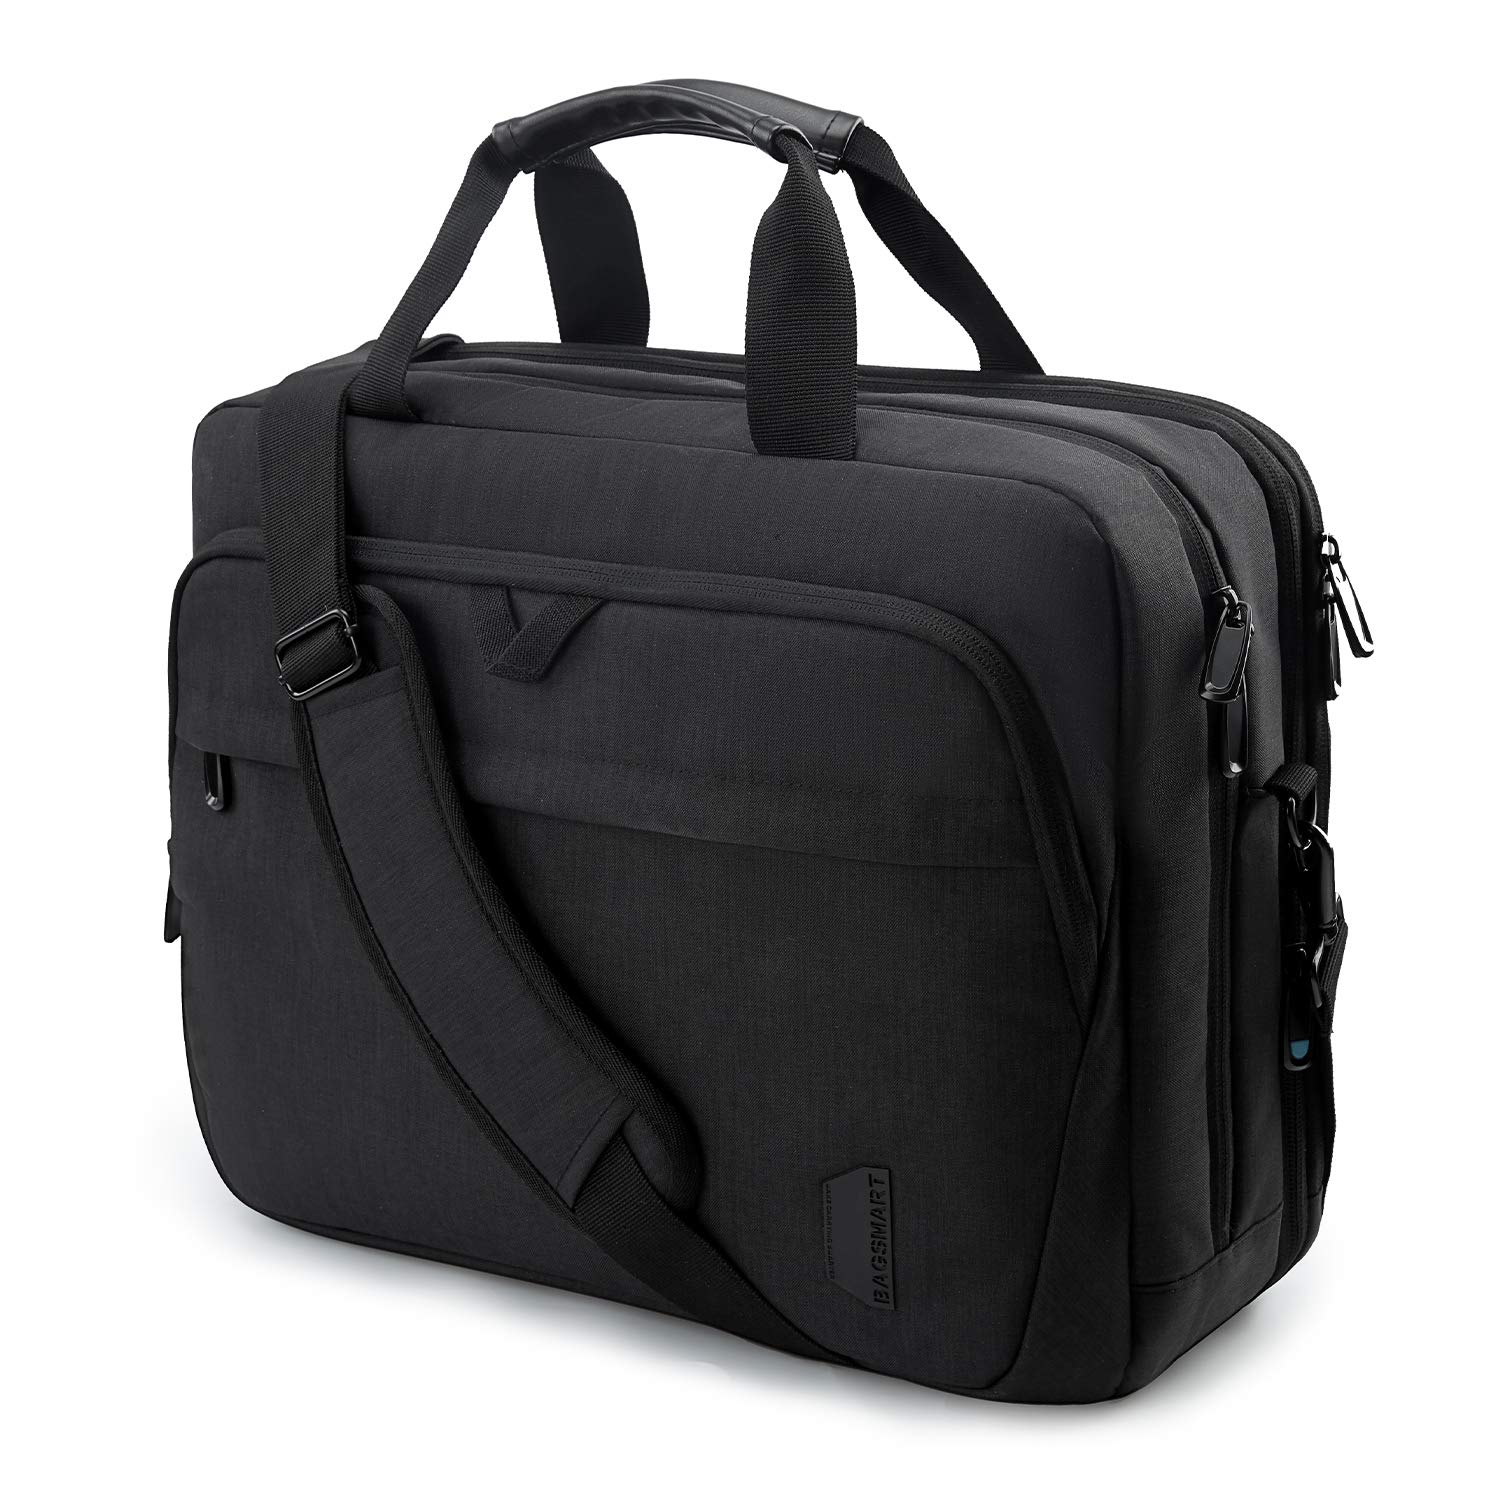 17.3 Inch Laptop Bag,BAGSMART Large Expandable Review - LightBagTravel.com